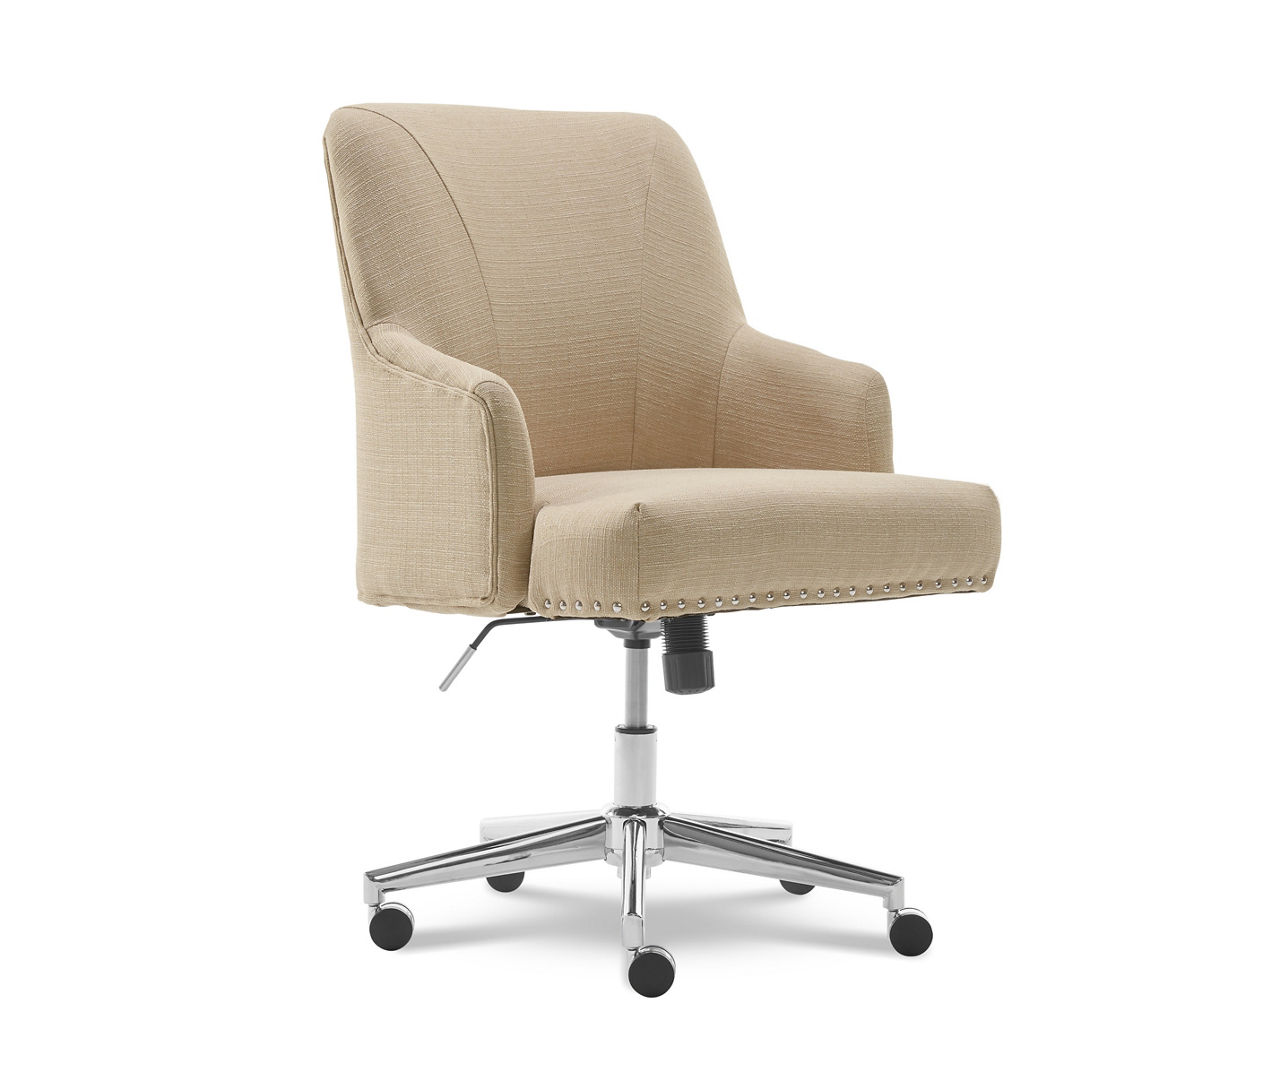 Serta Leighton Beige Memory Foam Fabric Office Chair | Big Lots